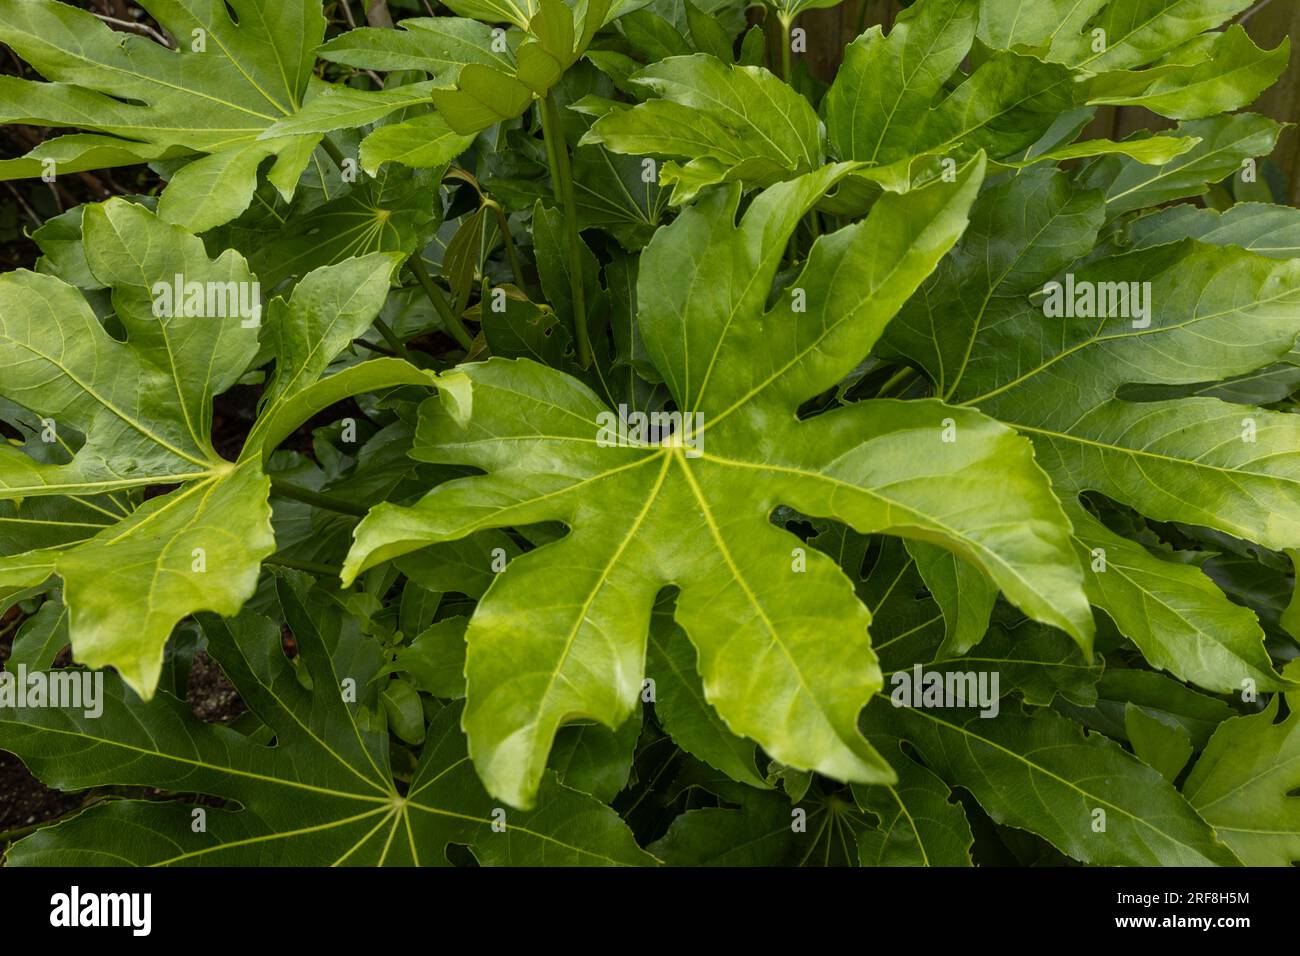 Fatsia japonica leaves Stock Photo